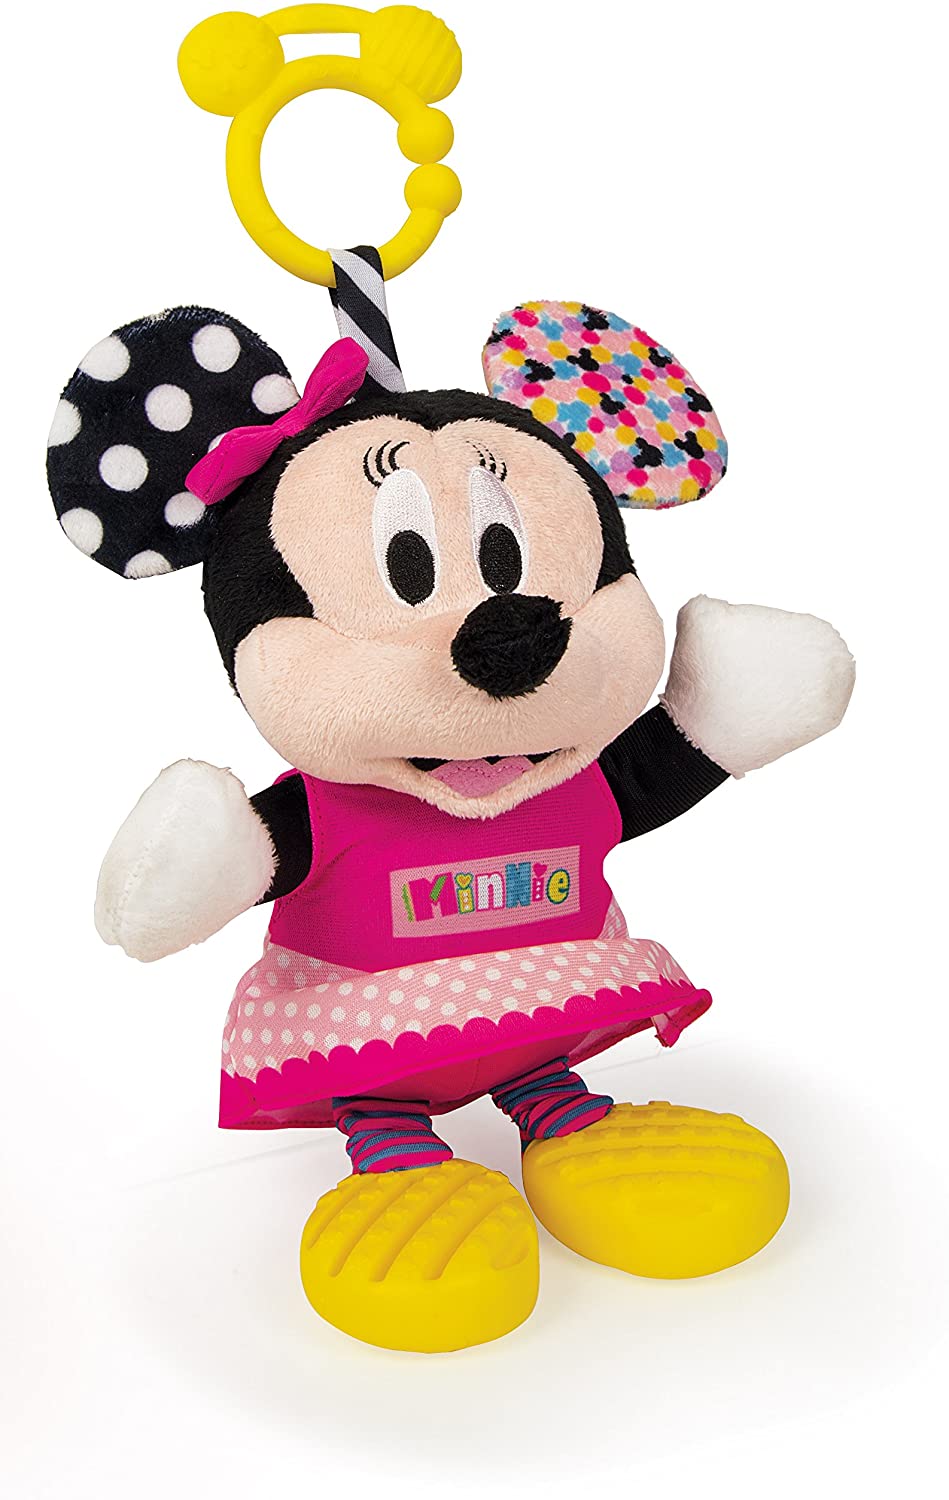 Clementoni 17164 Disney Baby Minnie First Activities Plush